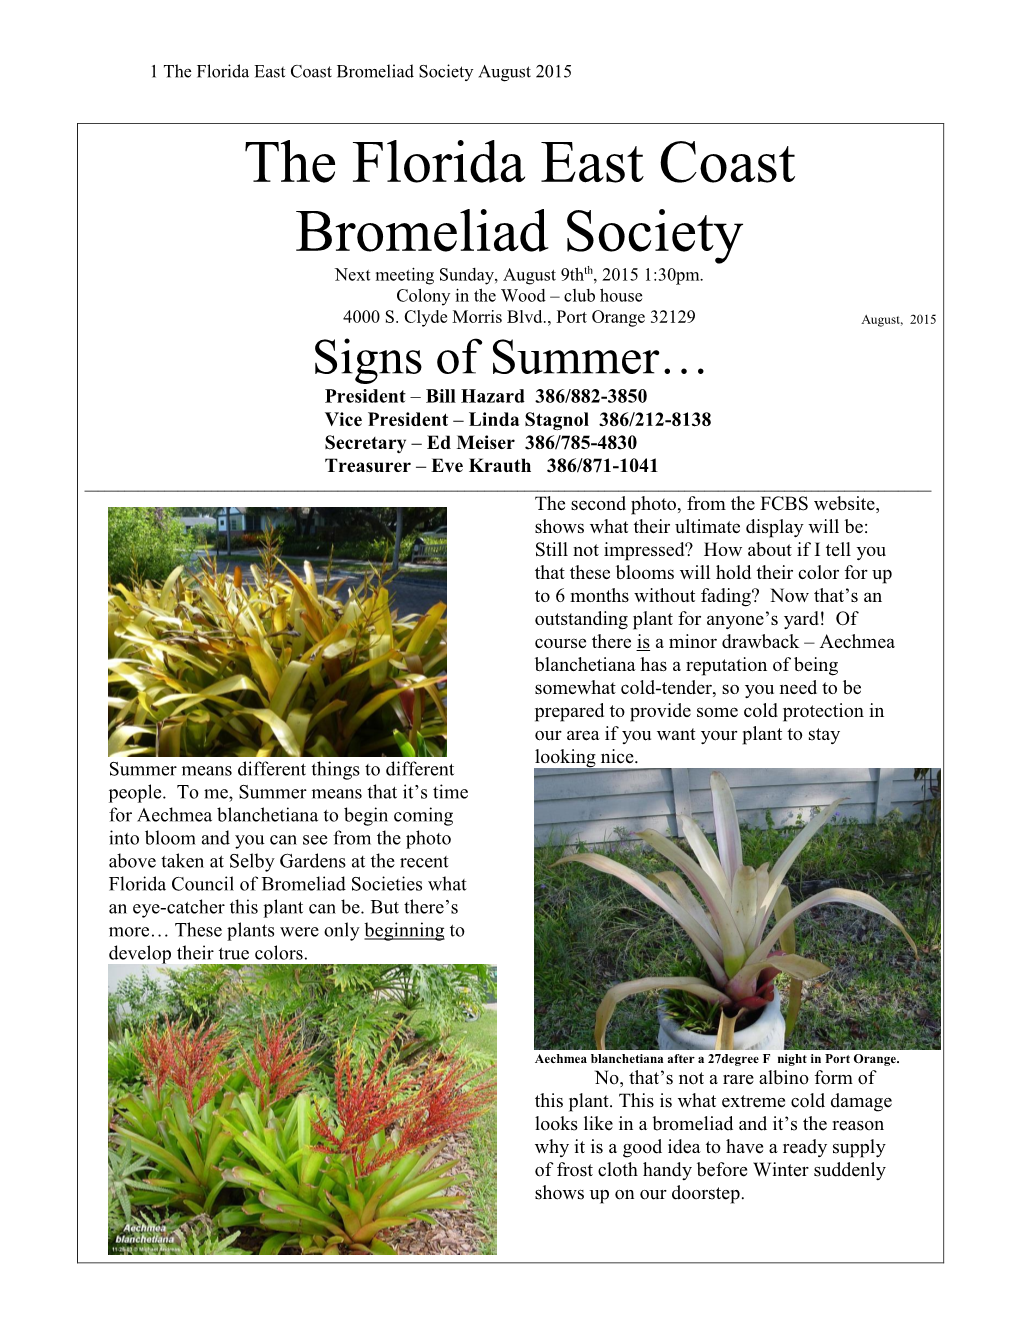 The Florida East Coast Bromeliad Society August 2015